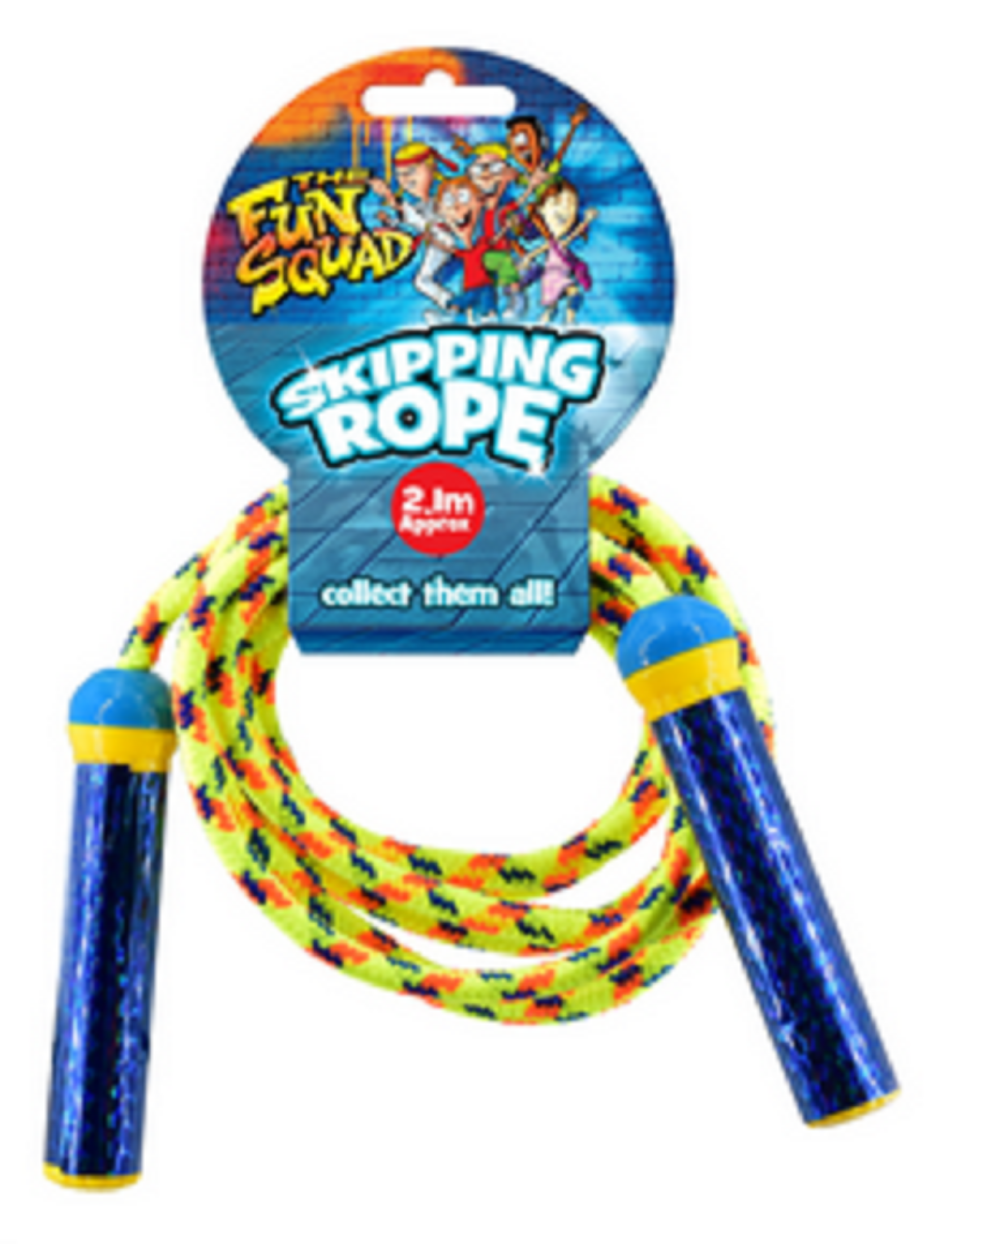 2.1M Fun Squad Skipping Rope